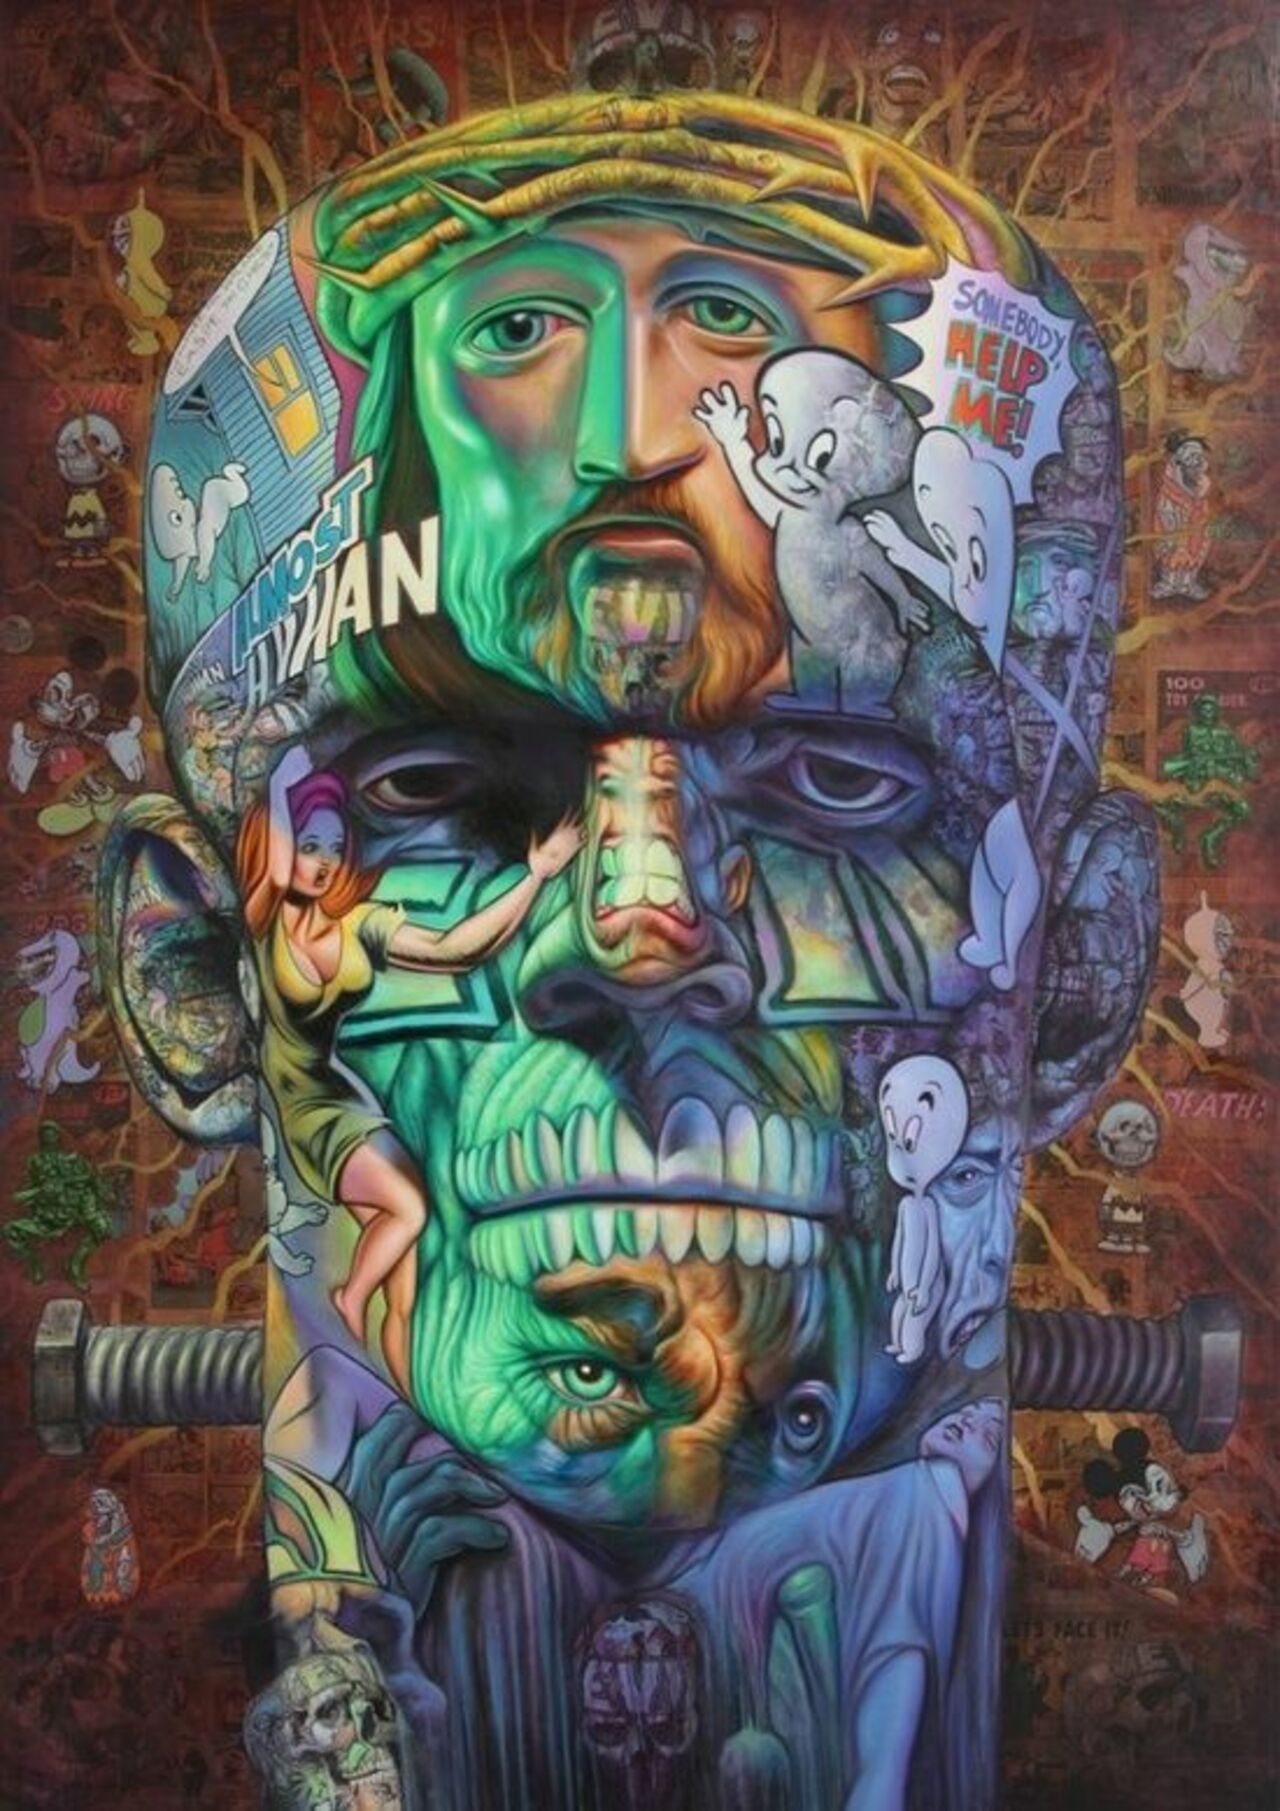 Ron English#streetart #mural #graffiti #art https://t.co/3YEeHIo8xK